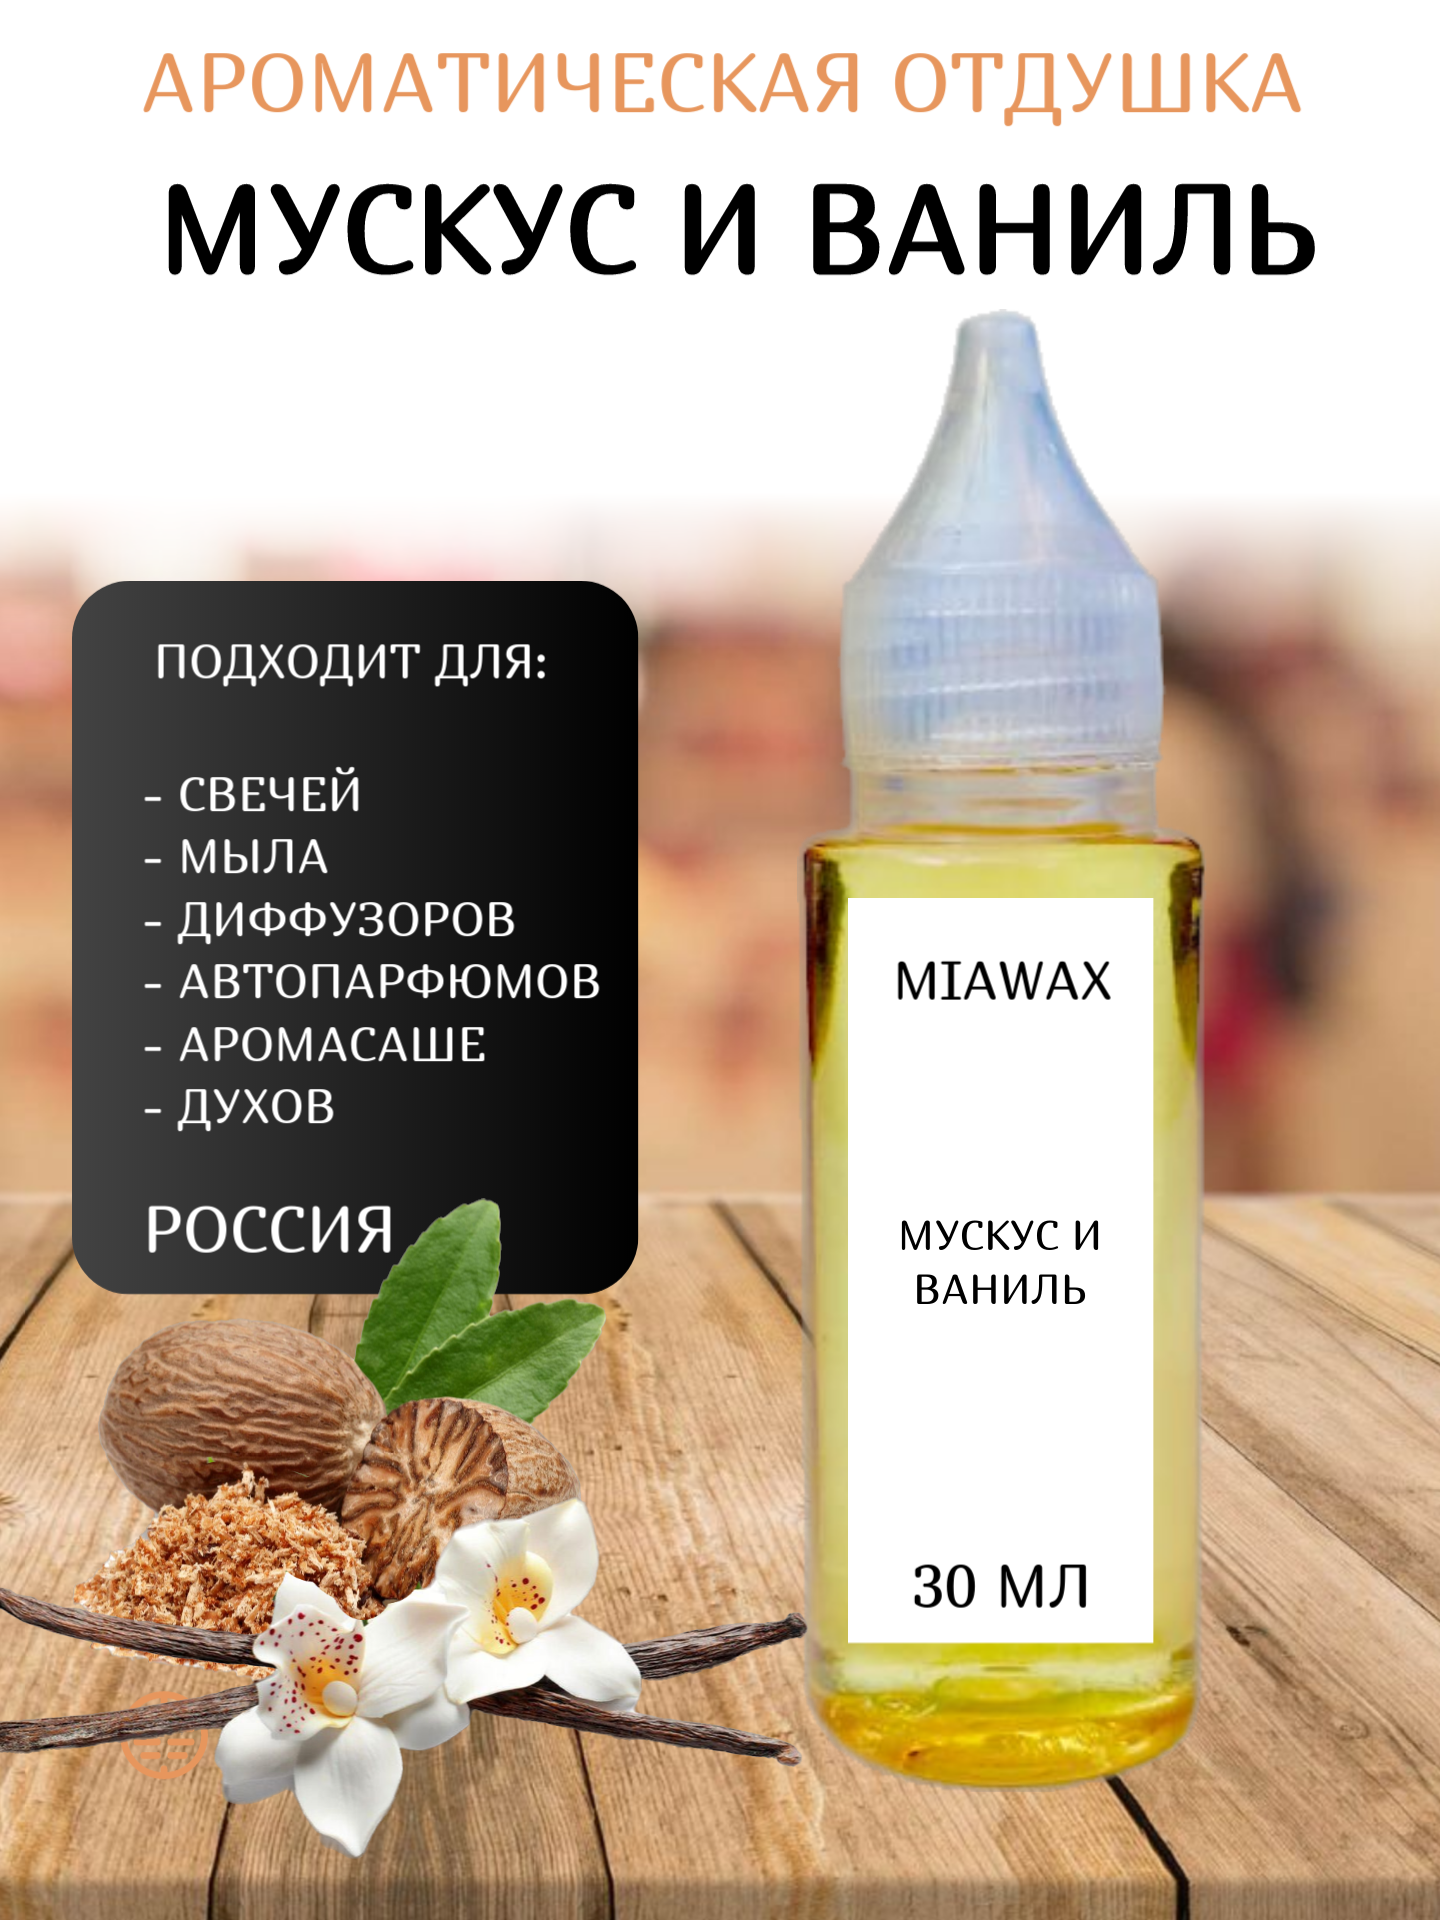 Отдушка MIAWAX Мускус и ваниль, 30 мл